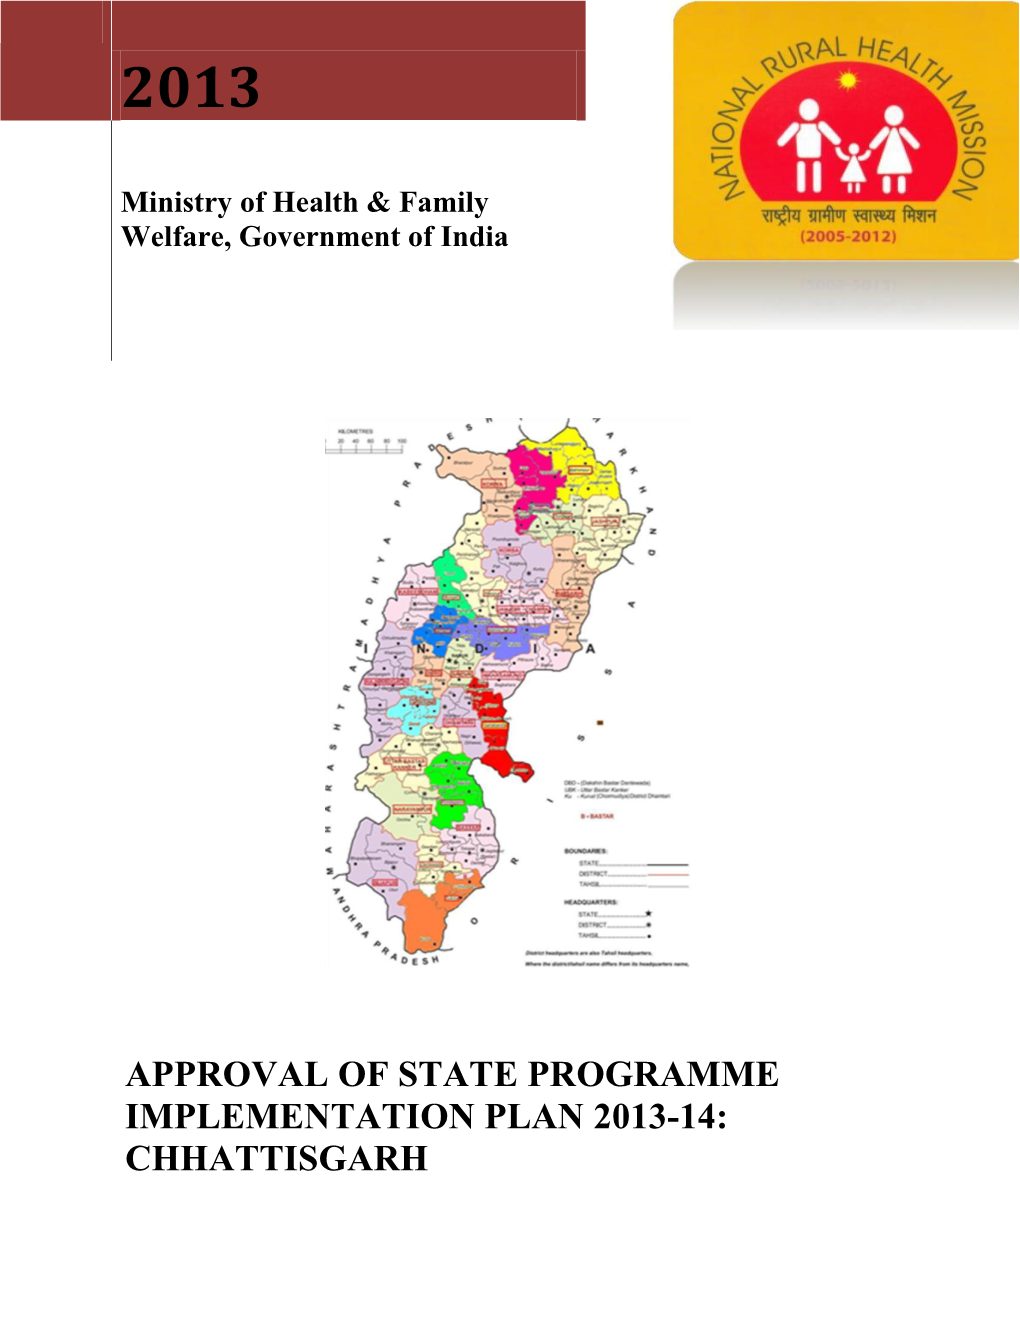 Approval of State Programme Implementation Plan 2013-14: Chhattisgarh